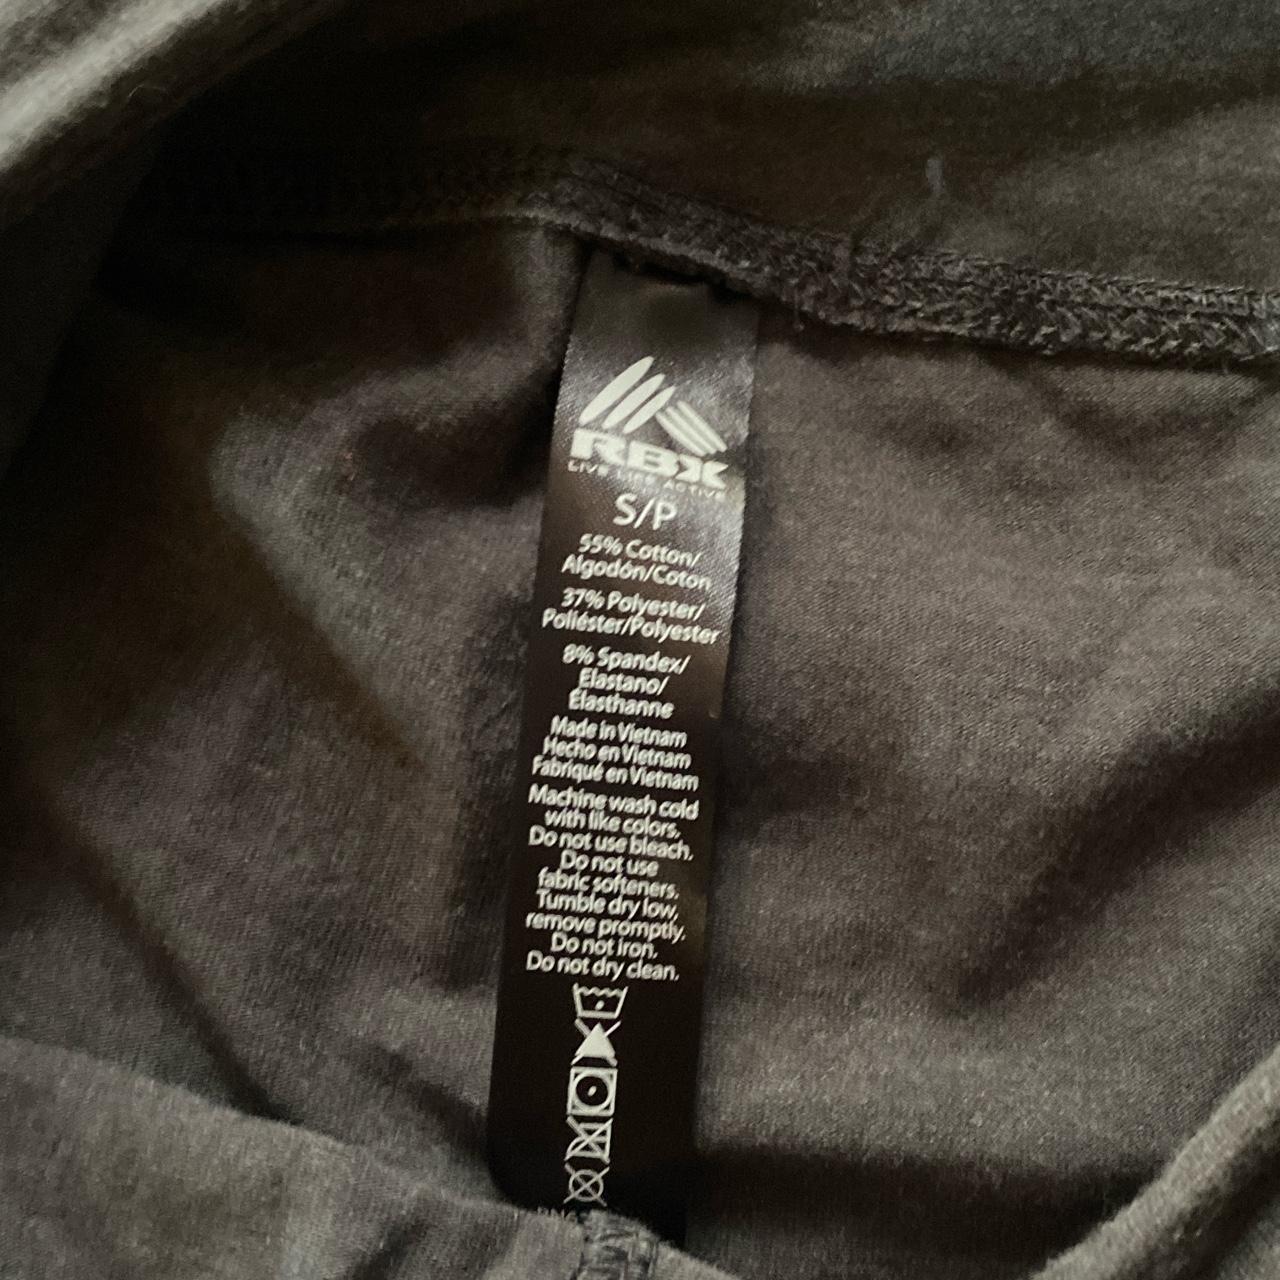 Product Image 2 - Grey and black shorts!! 2